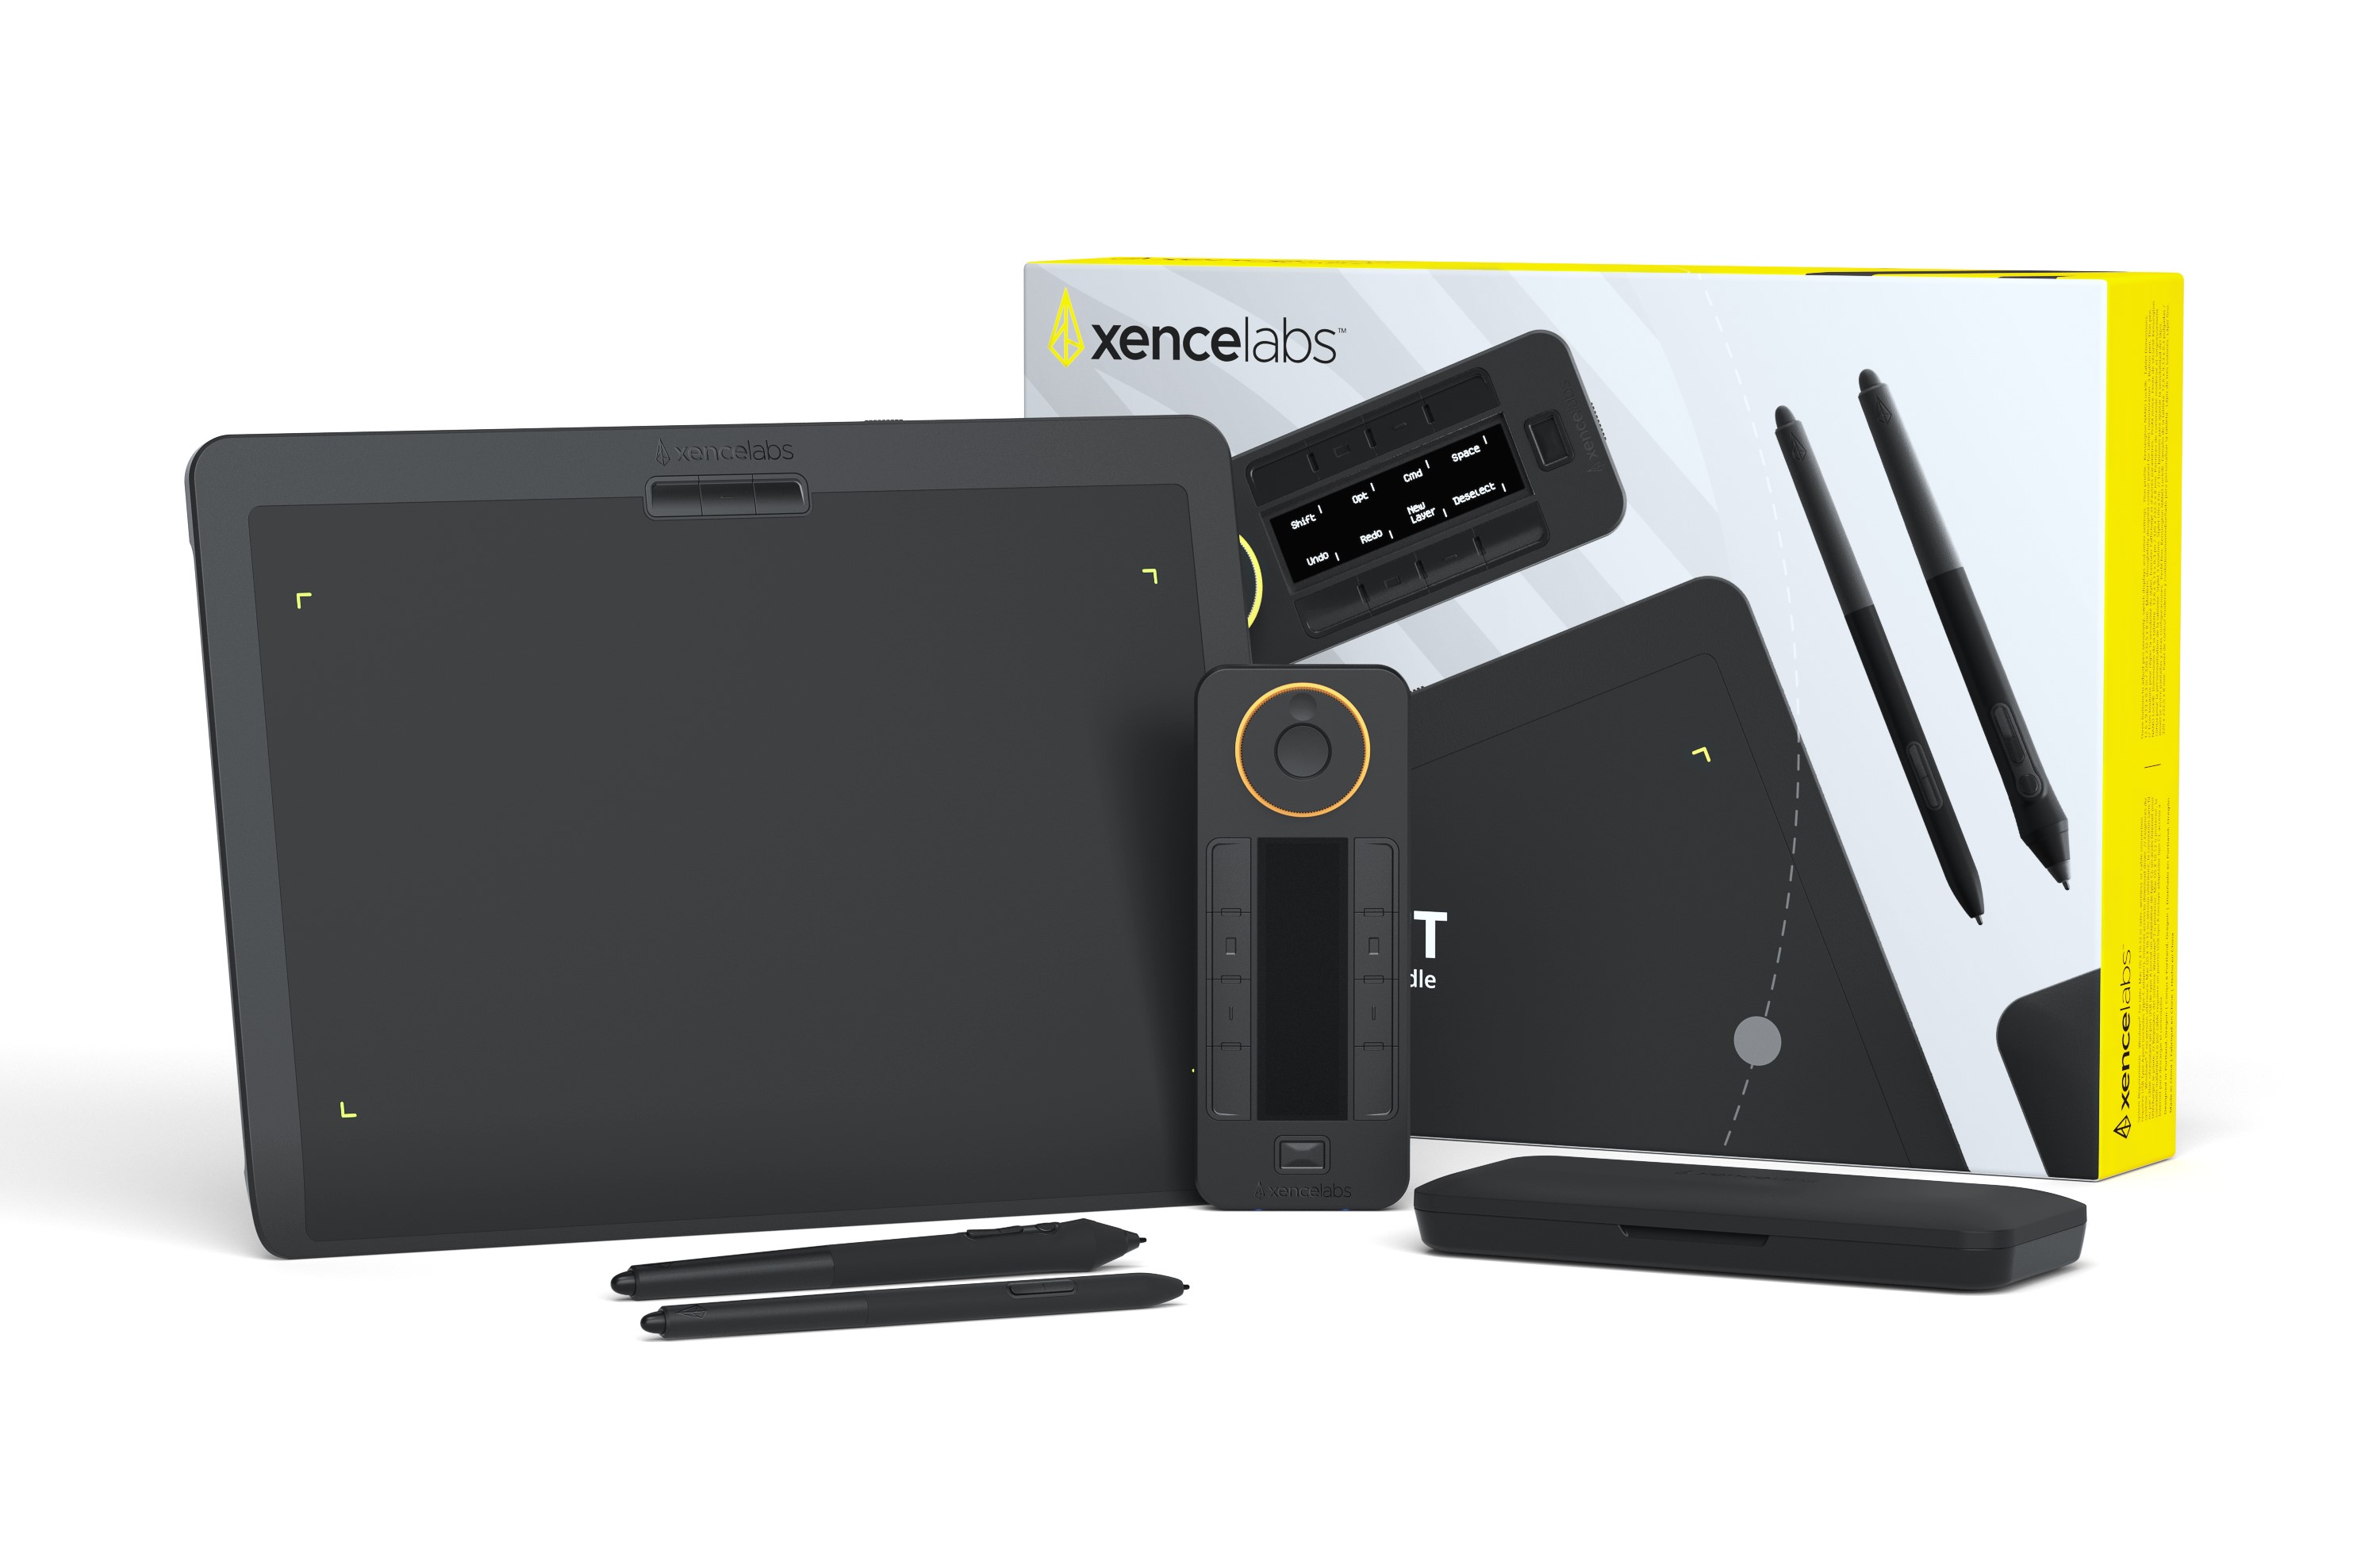 Tsukumo プロフェッショナル向け新ペンタブレットメーカーxencelabs センスラボ の製品を販売開始 Tsukumo ツクモ のプレスリリース